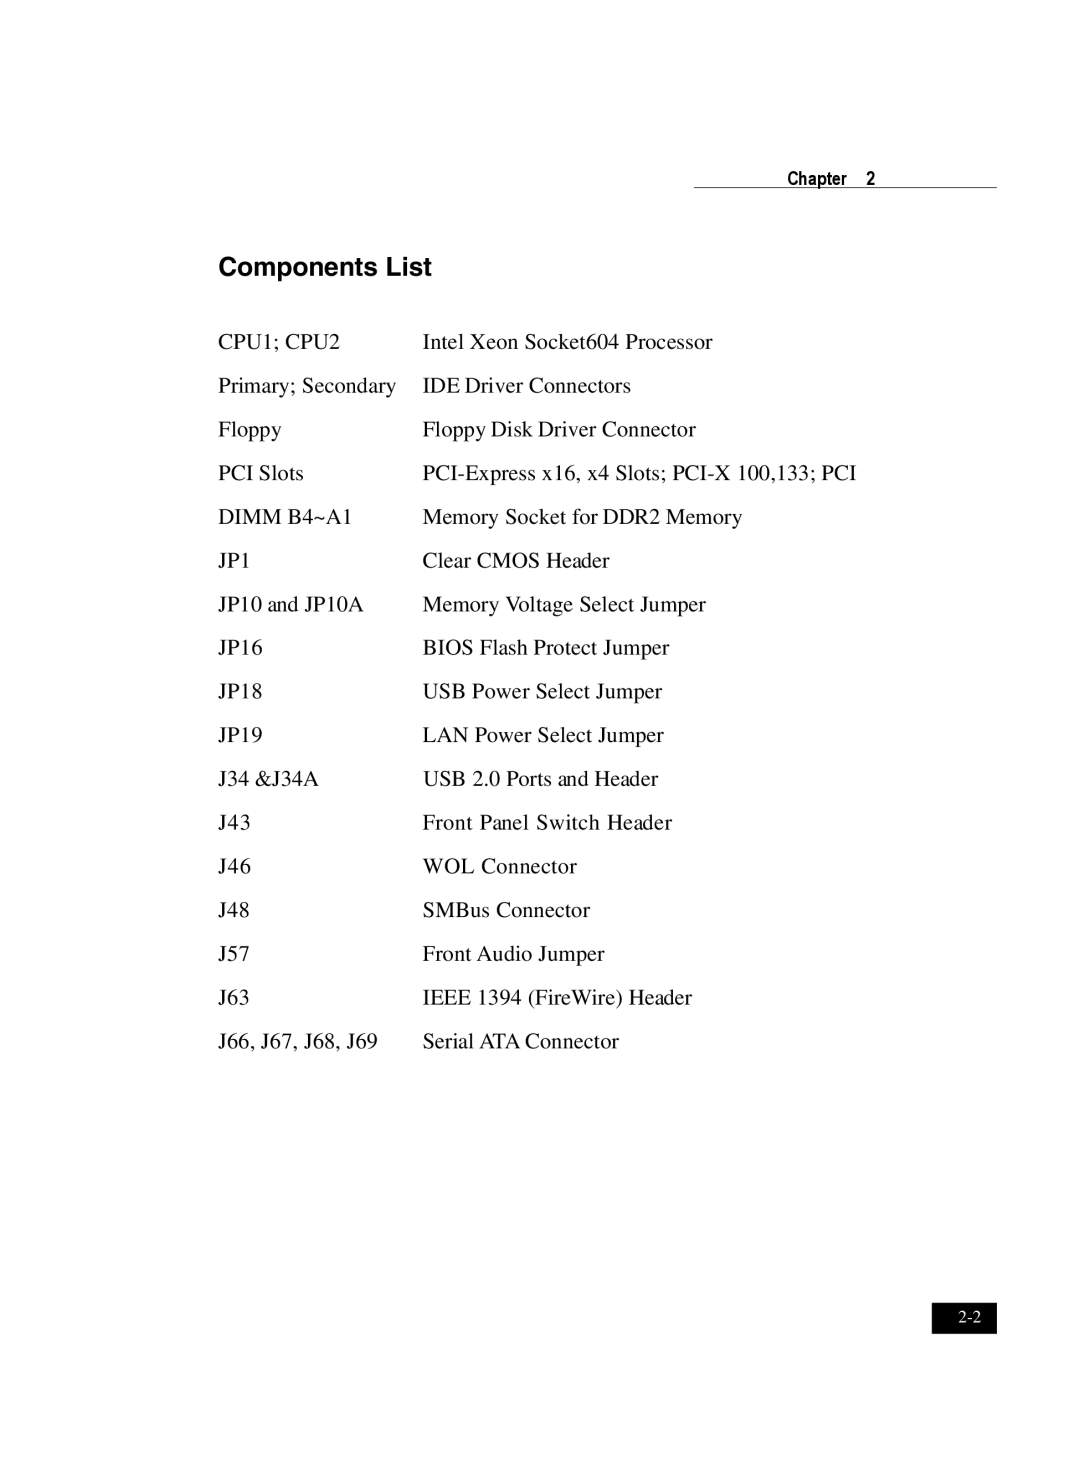 IBM DJ800 user manual Components List 